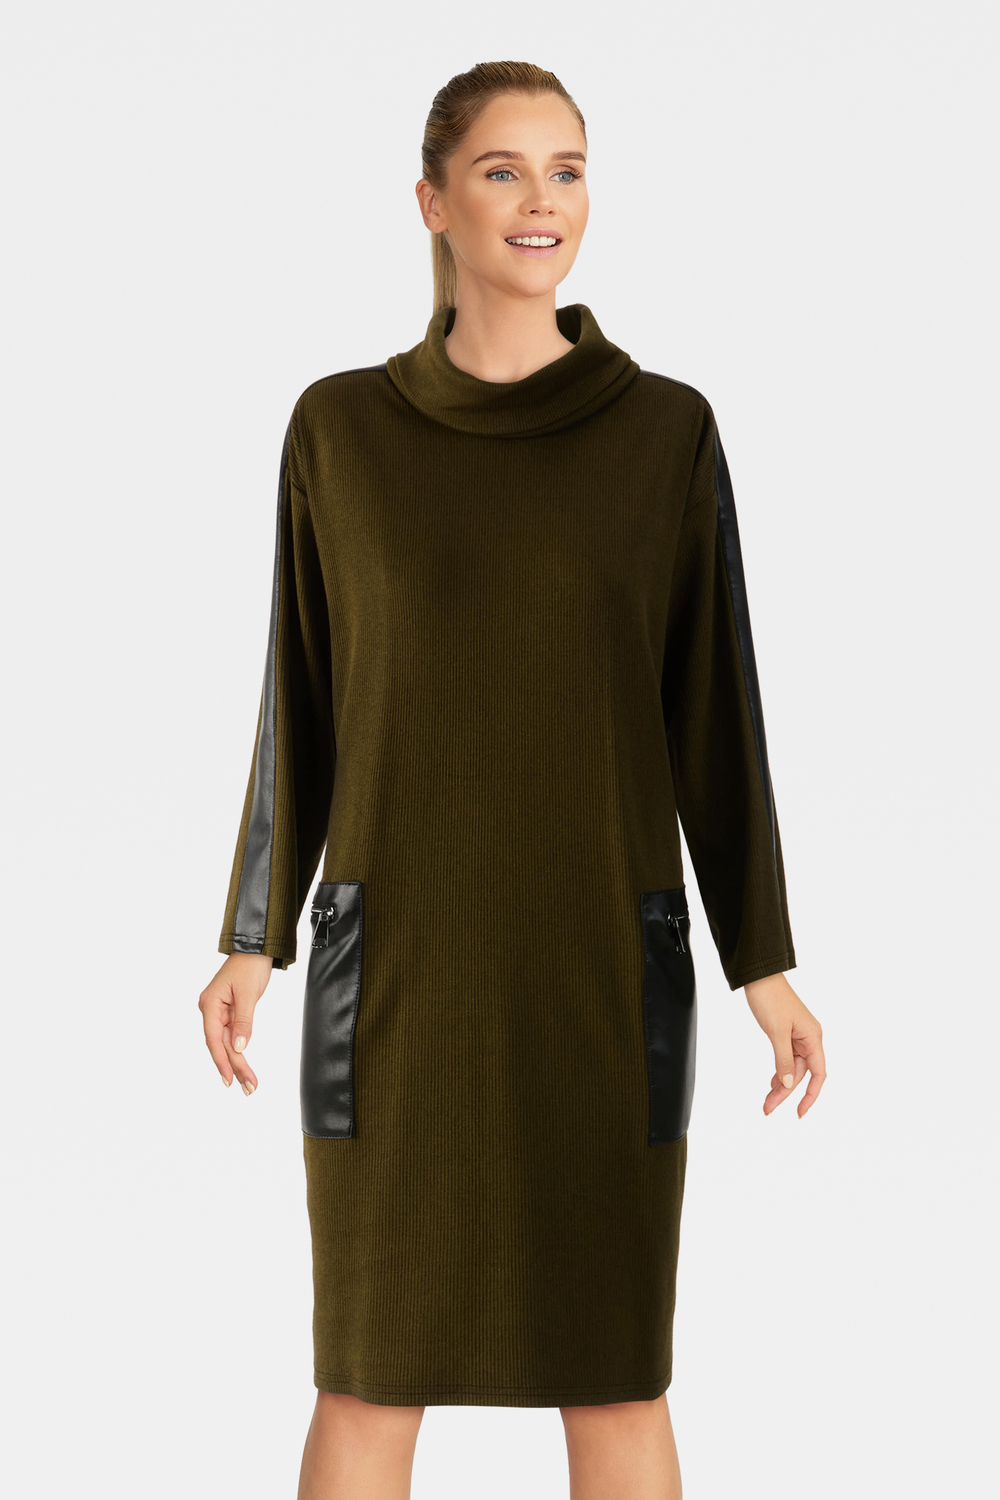 Robe trapèze courte modèle 233262. Olive/noir